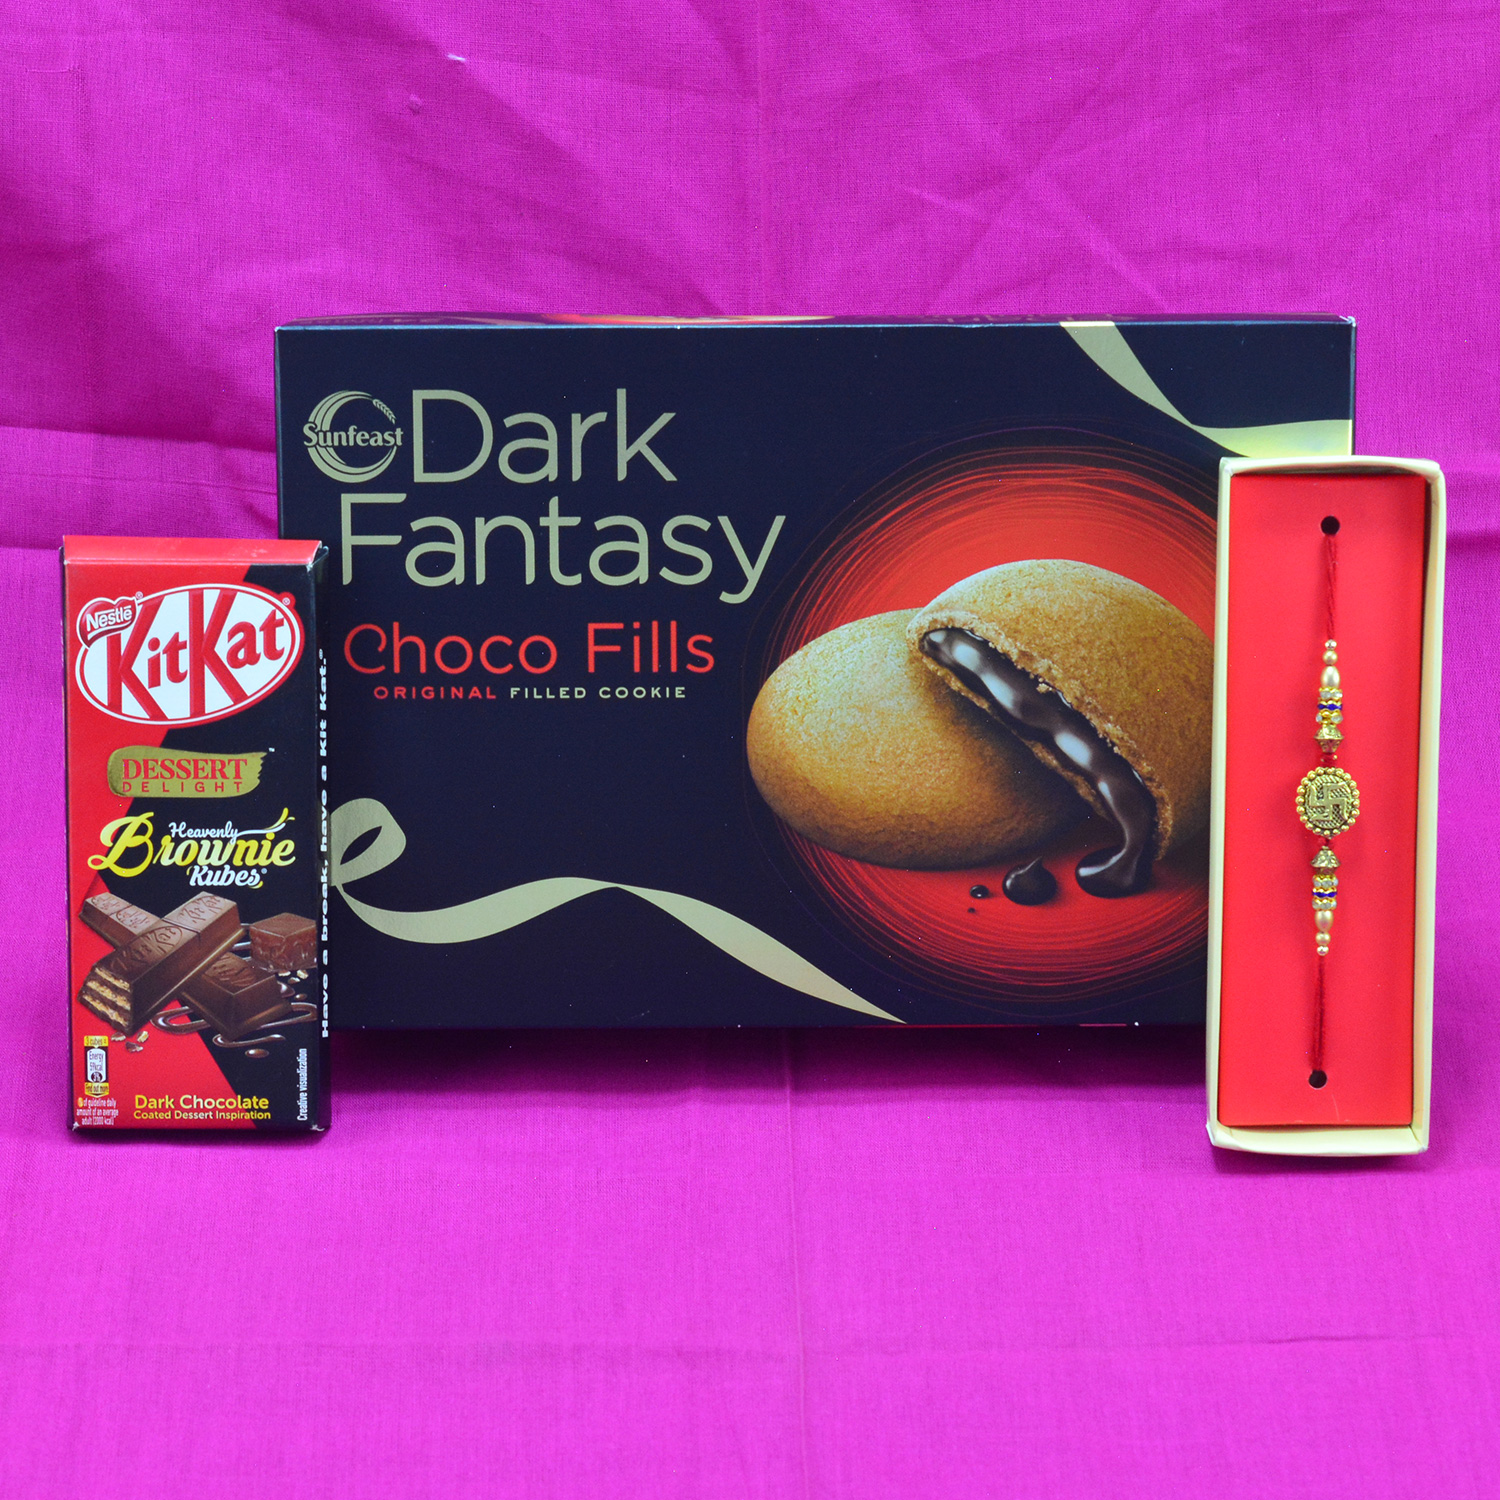 Wonderful Swastik Divine Rakhi wtih delightful Dark Fantasy Choco Fills and Kitkat Chocolate